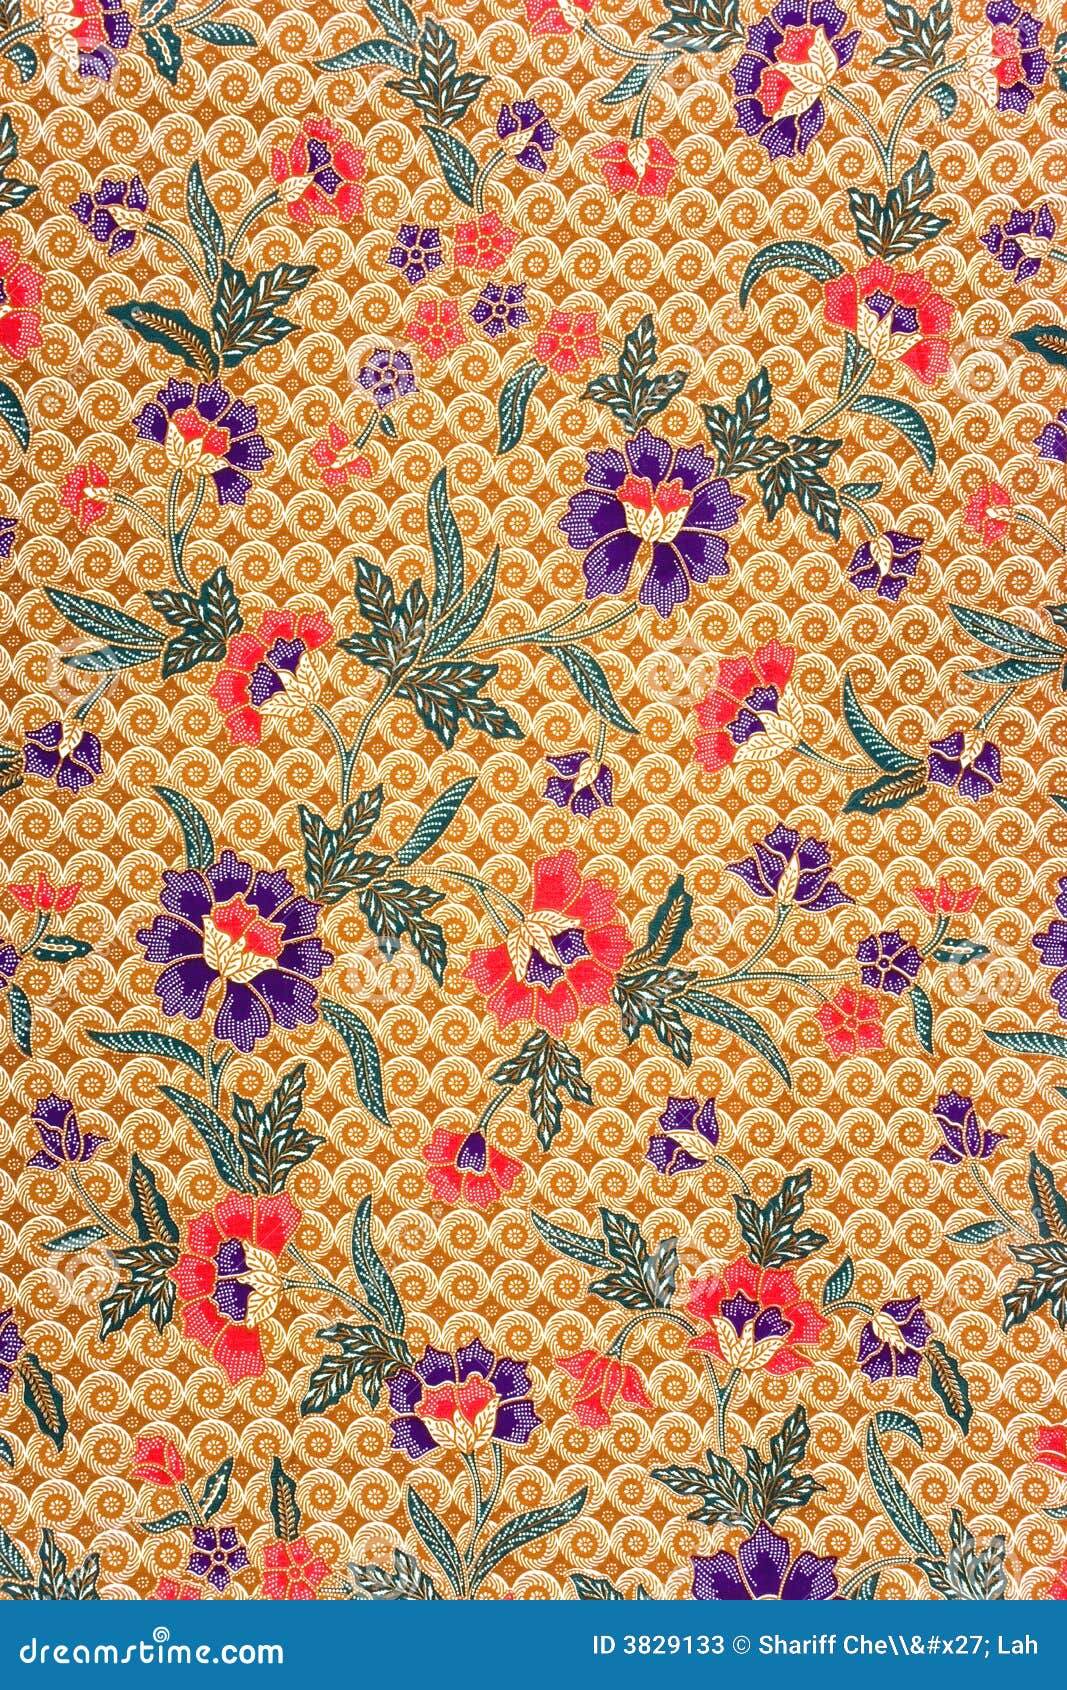  Indonesian  Batik  Sarong stock image  Image  of pattern 